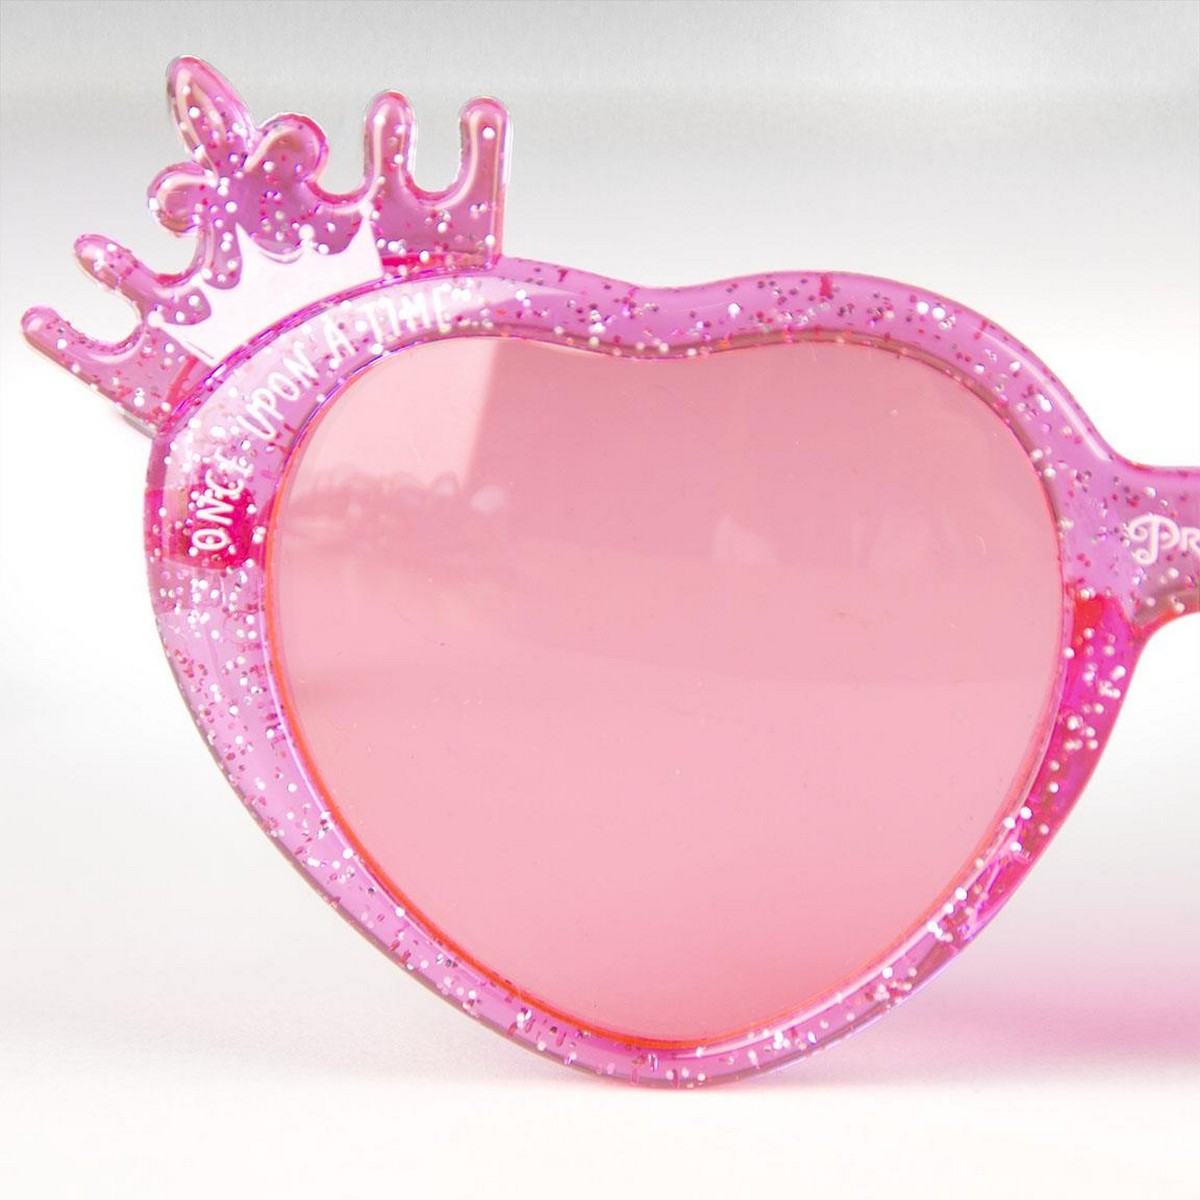 Child Sunglasses Princesses Disney